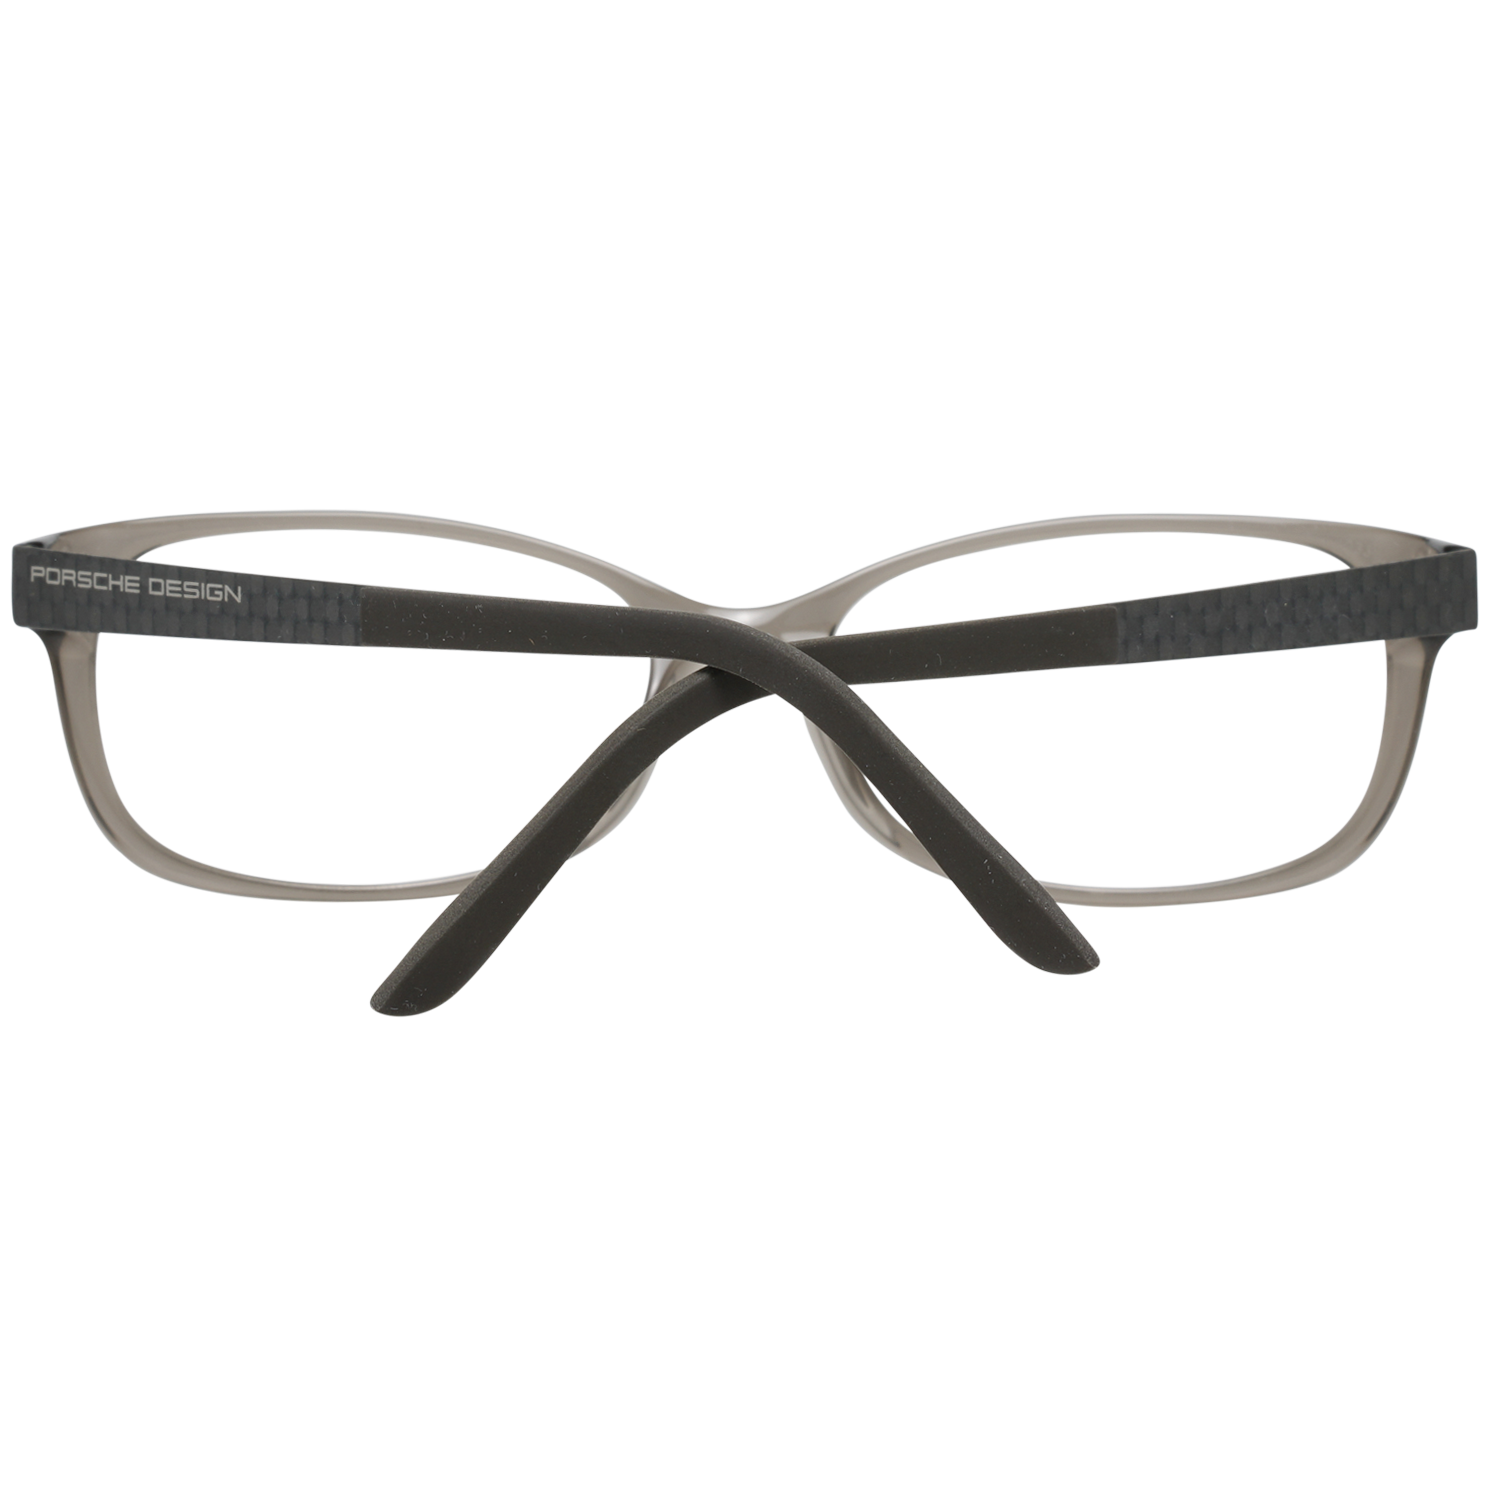 Porsche Design Eyeglasses Porsche Design Glasses Frames P8247 C 55 Eyeglasses Eyewear UK USA Australia 